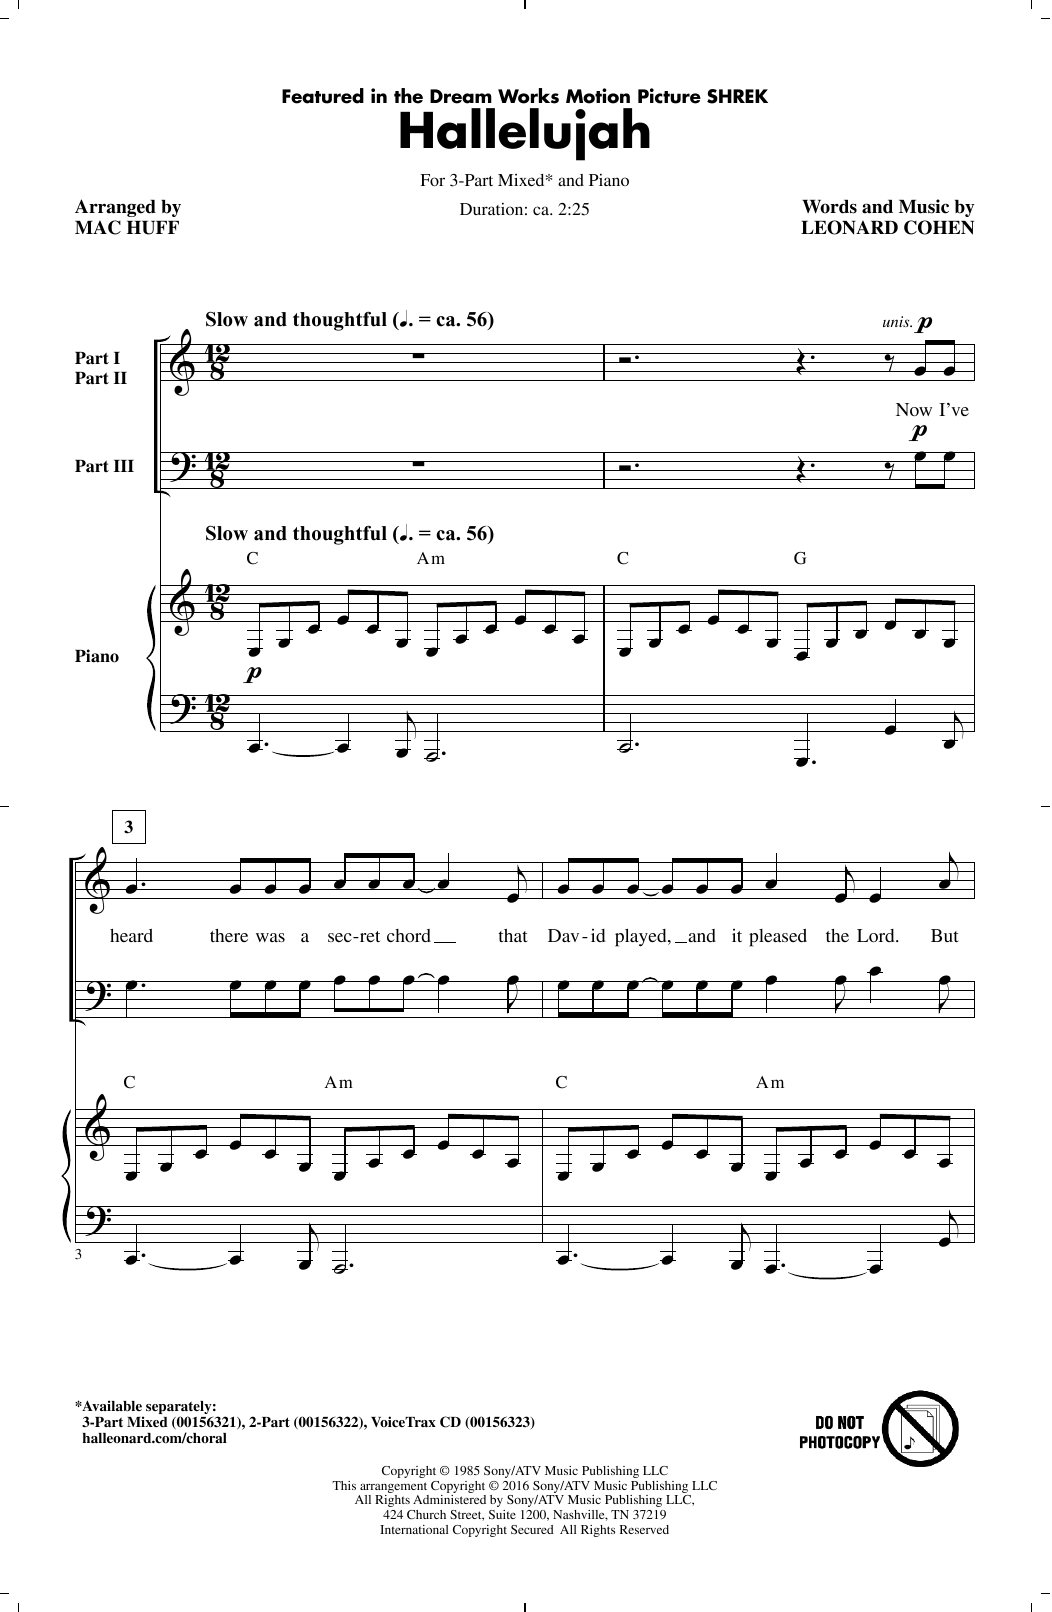 Leonard Cohen Hallelujah Arr Mac Huff Sheet Music Pdf Notes Chords Christian Score 2 Part Choir Download Printable Sku 164387 - hallelujah shrek song roblox id